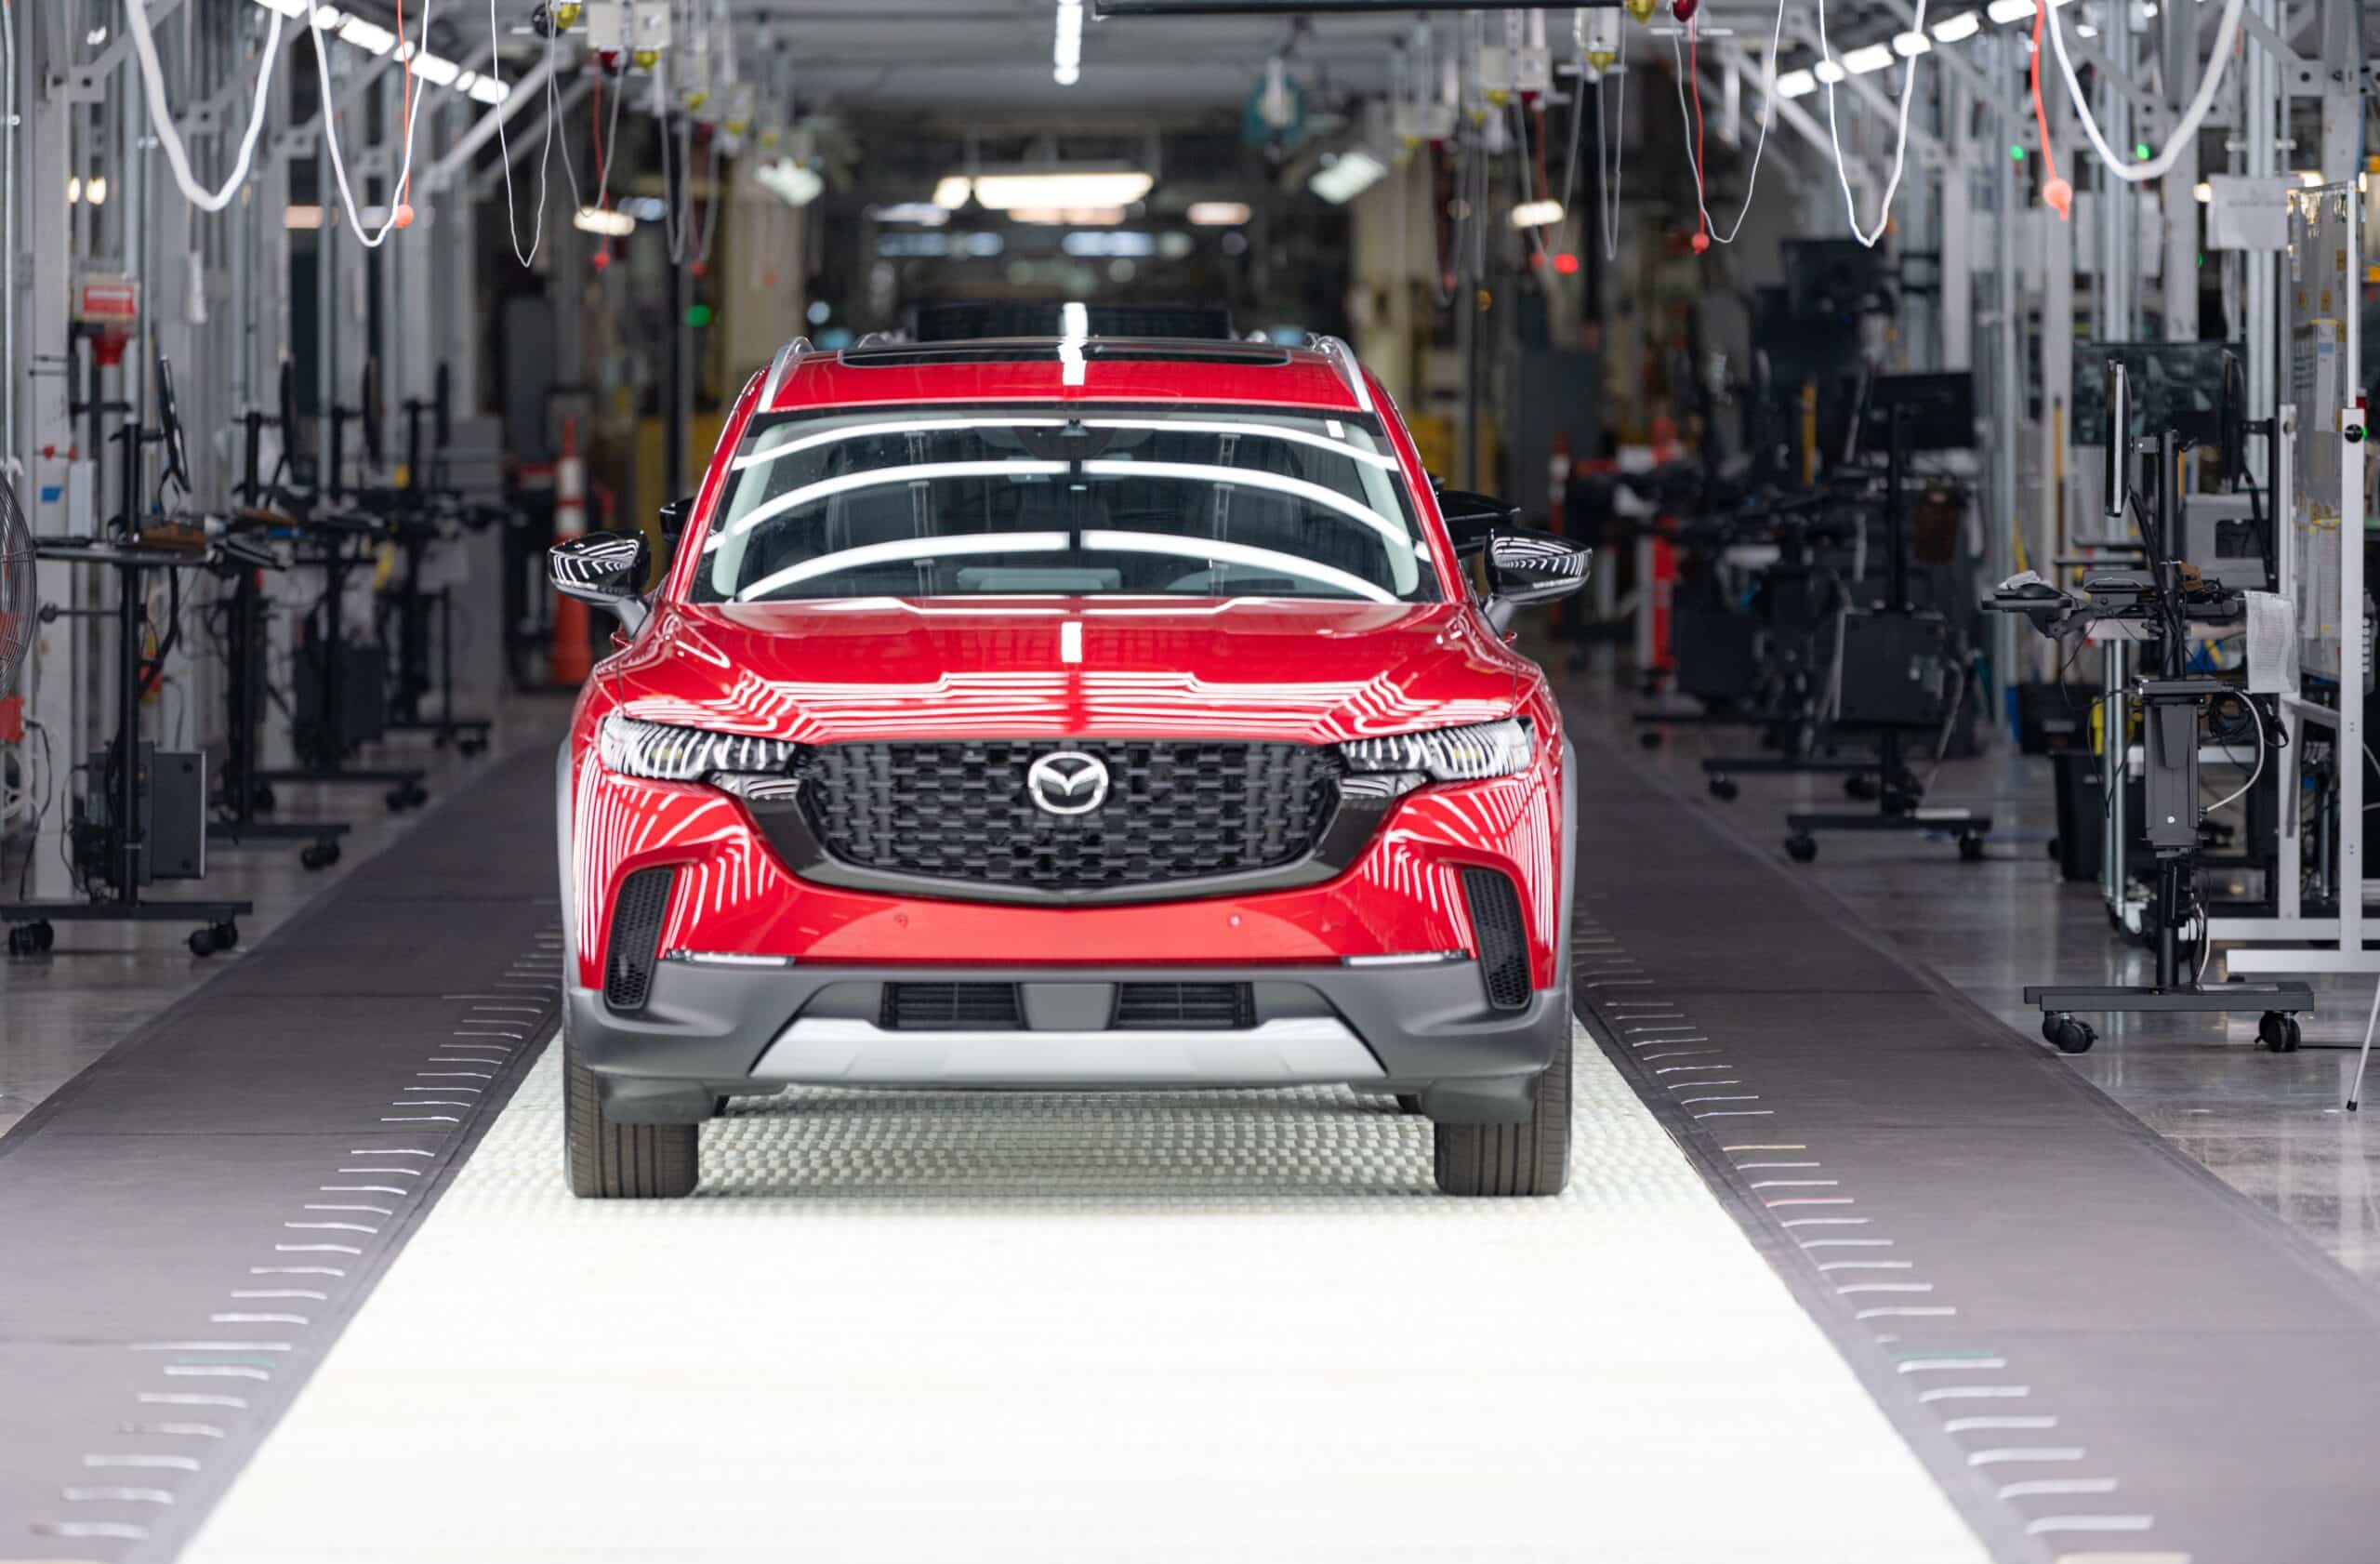 Mazda Toyota Manufacturing dona 180,000 dólares a organizaciones sin fines de lucro